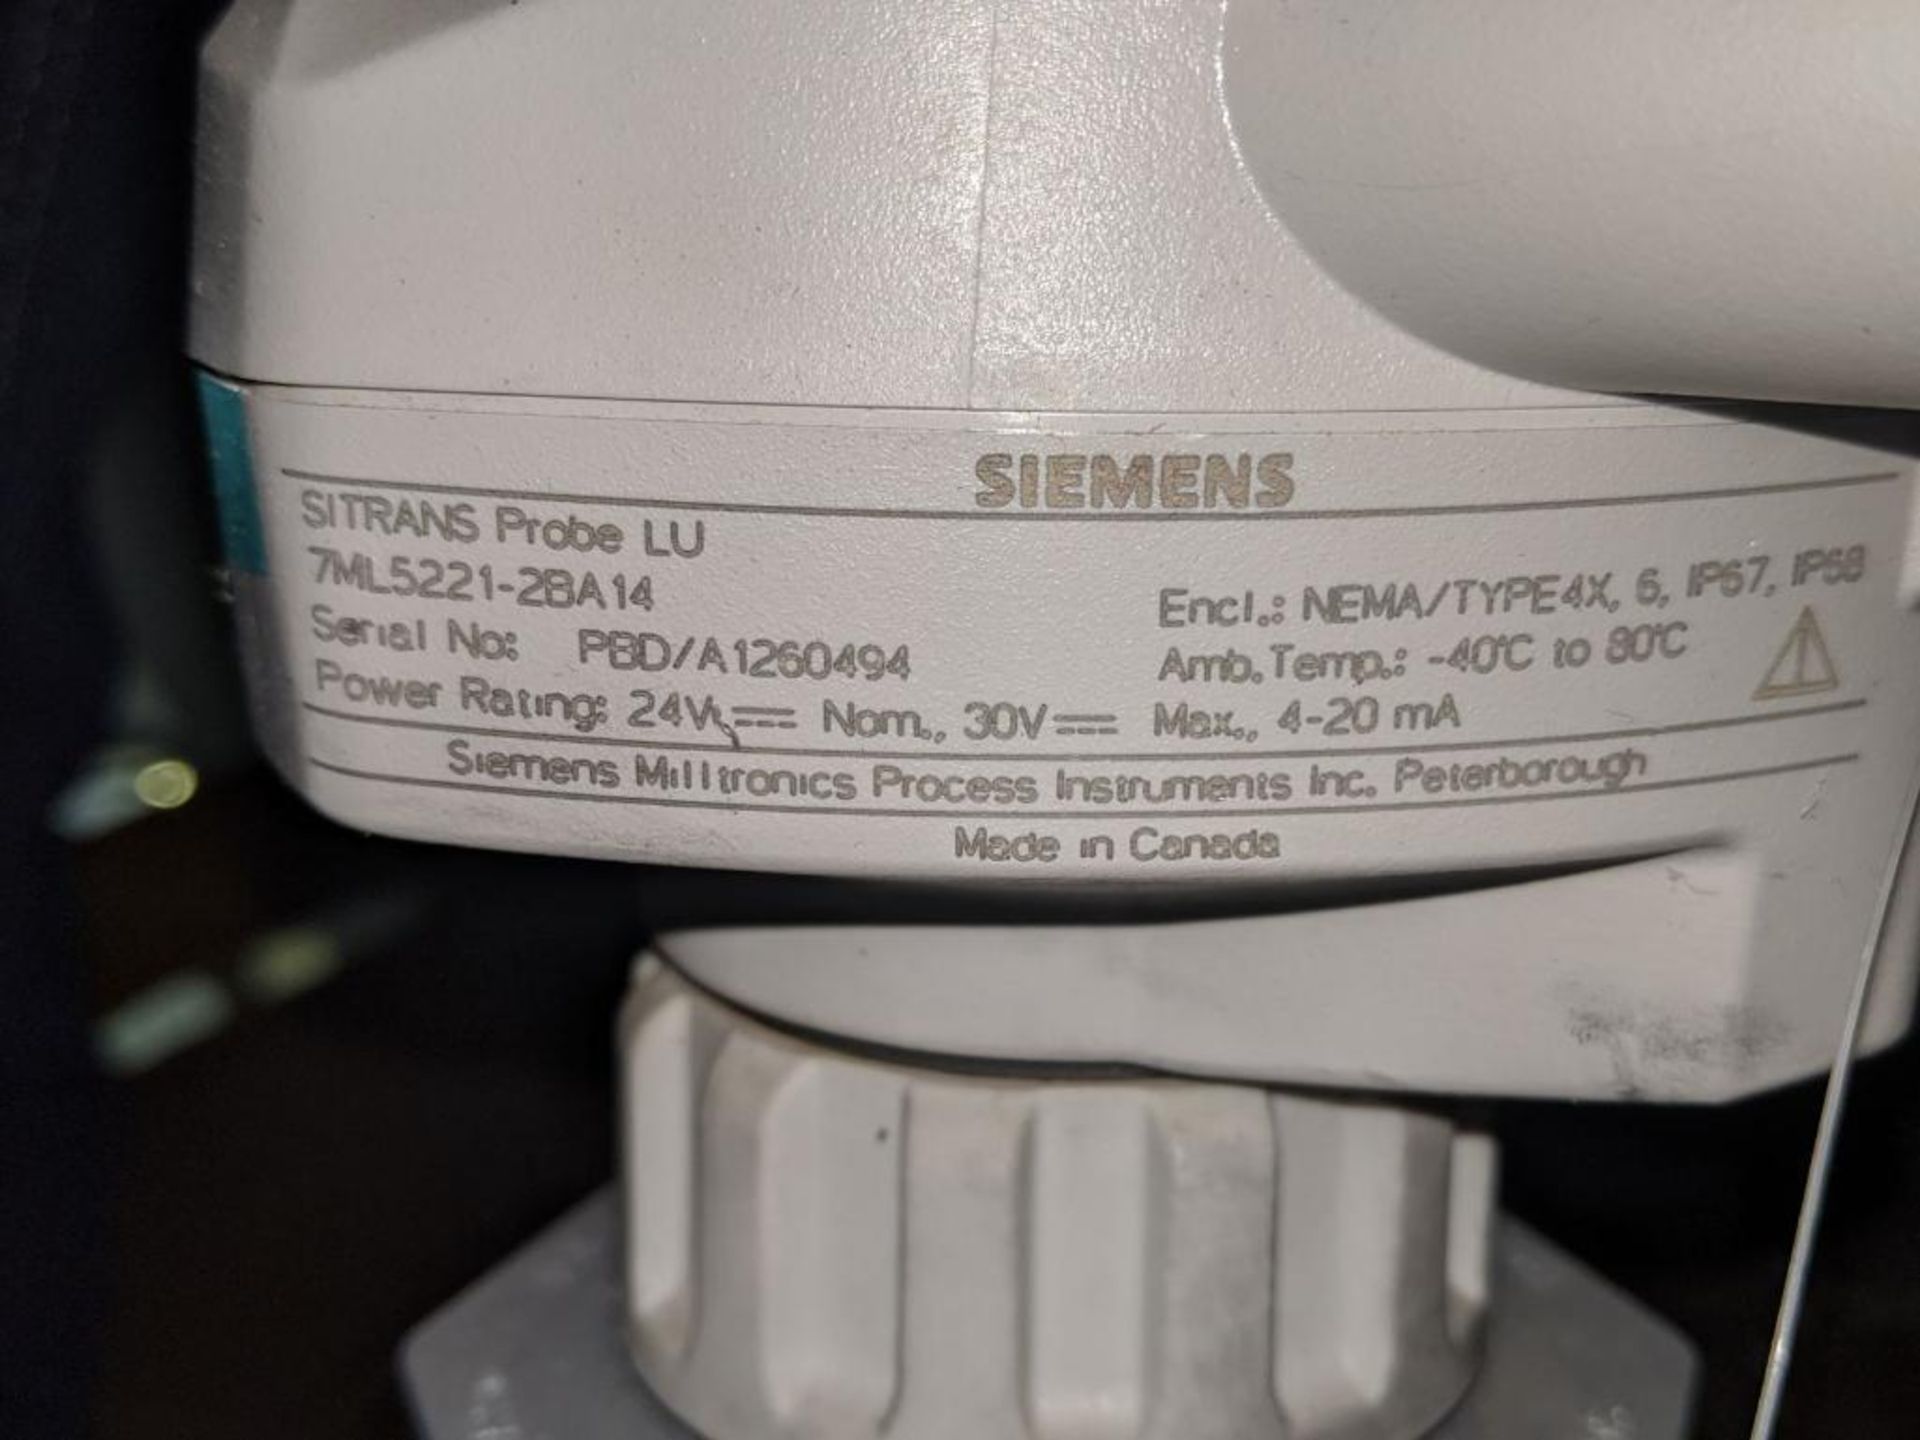 Siemens Model SITRANS Probe LU Ultrasonic Level Measurement Transmitter - Image 3 of 4